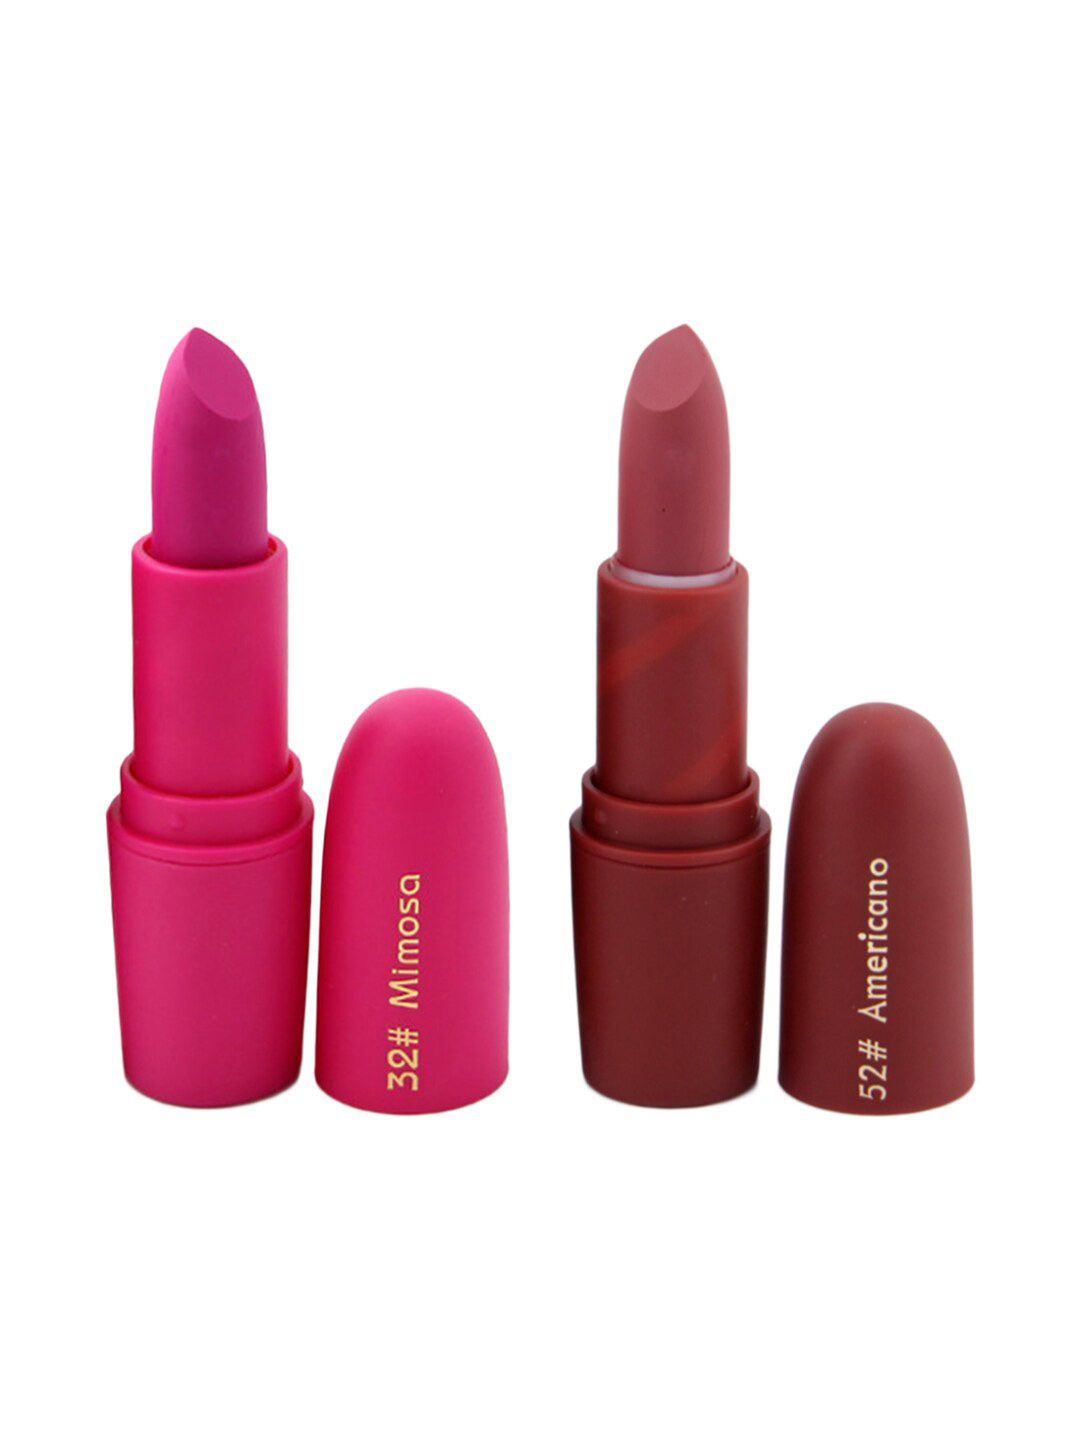 MISS ROSE Professional Make-Up Set of 2 Matte Creamy Lipsticks - Mimosa 32 & Americano 52 Price in India